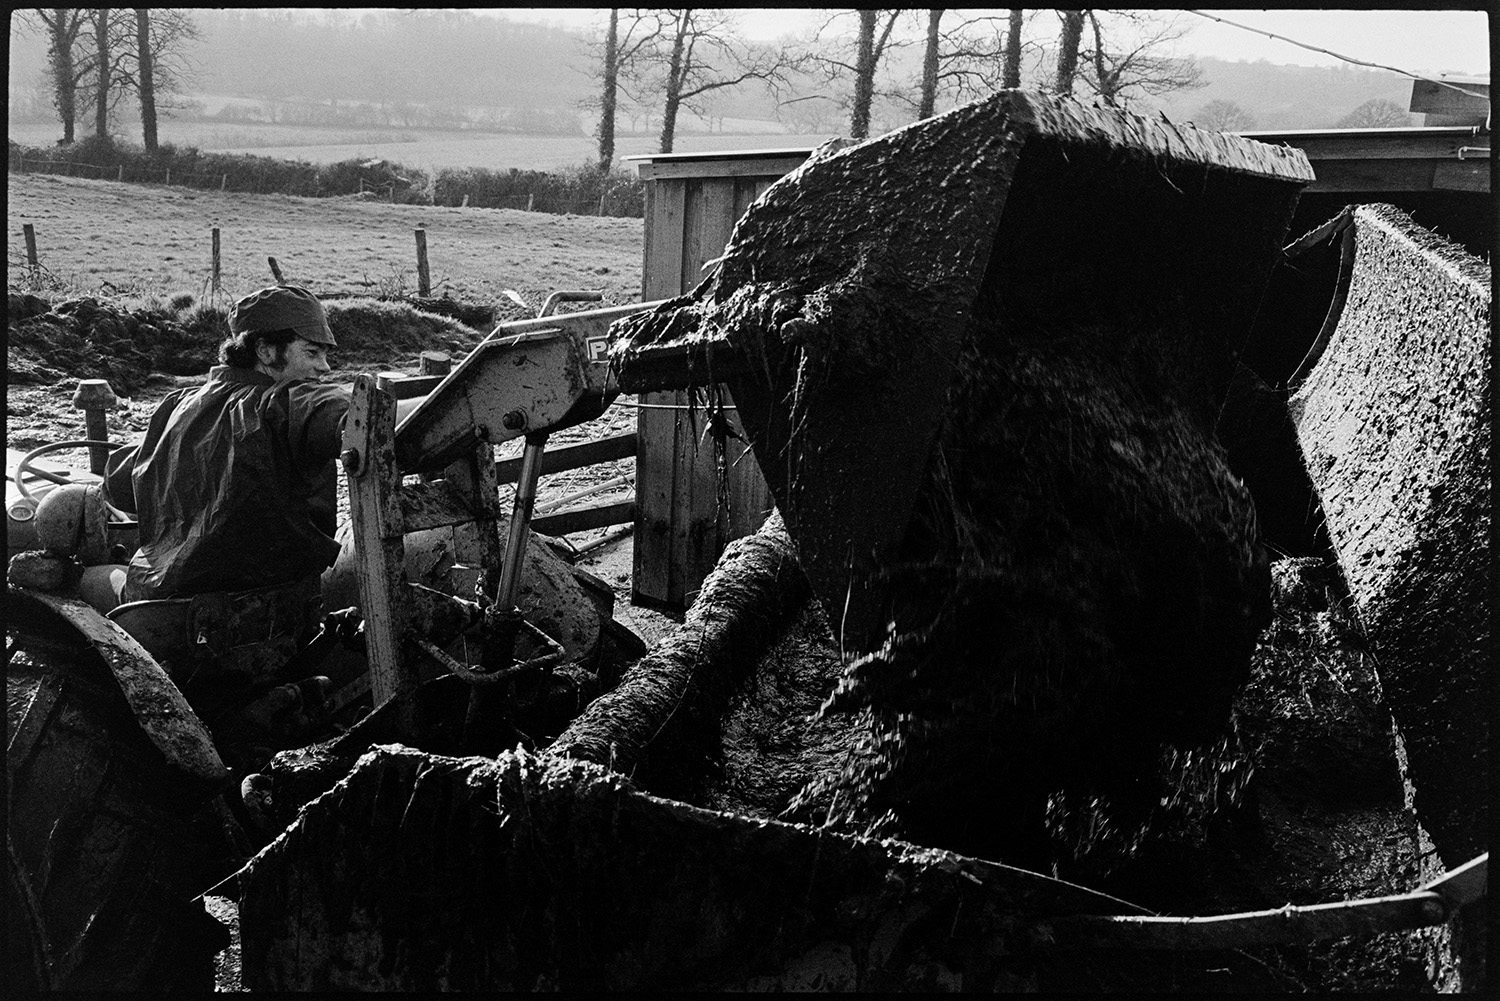 Tractor and muck spreader. 
[David Ward loading dung into a muck spreader using a tractor at Nethercott, Iddesleigh.]